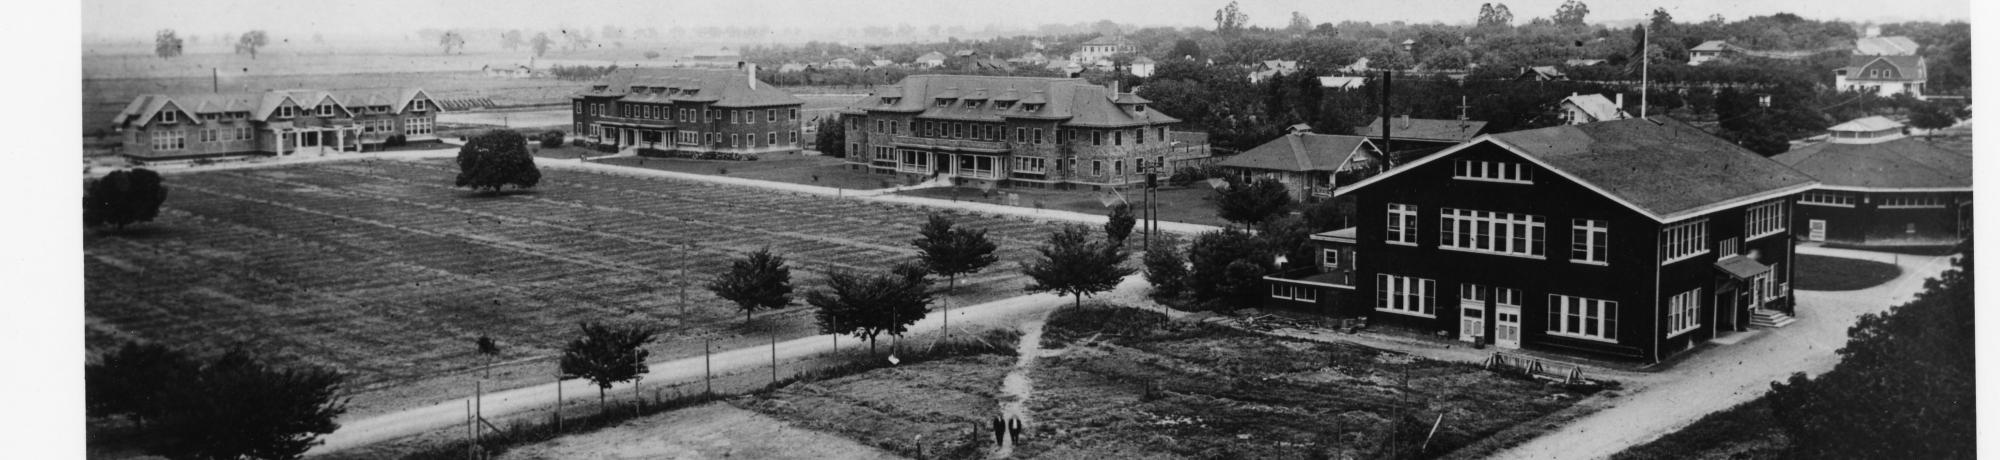 University farm dorms and office, 1912